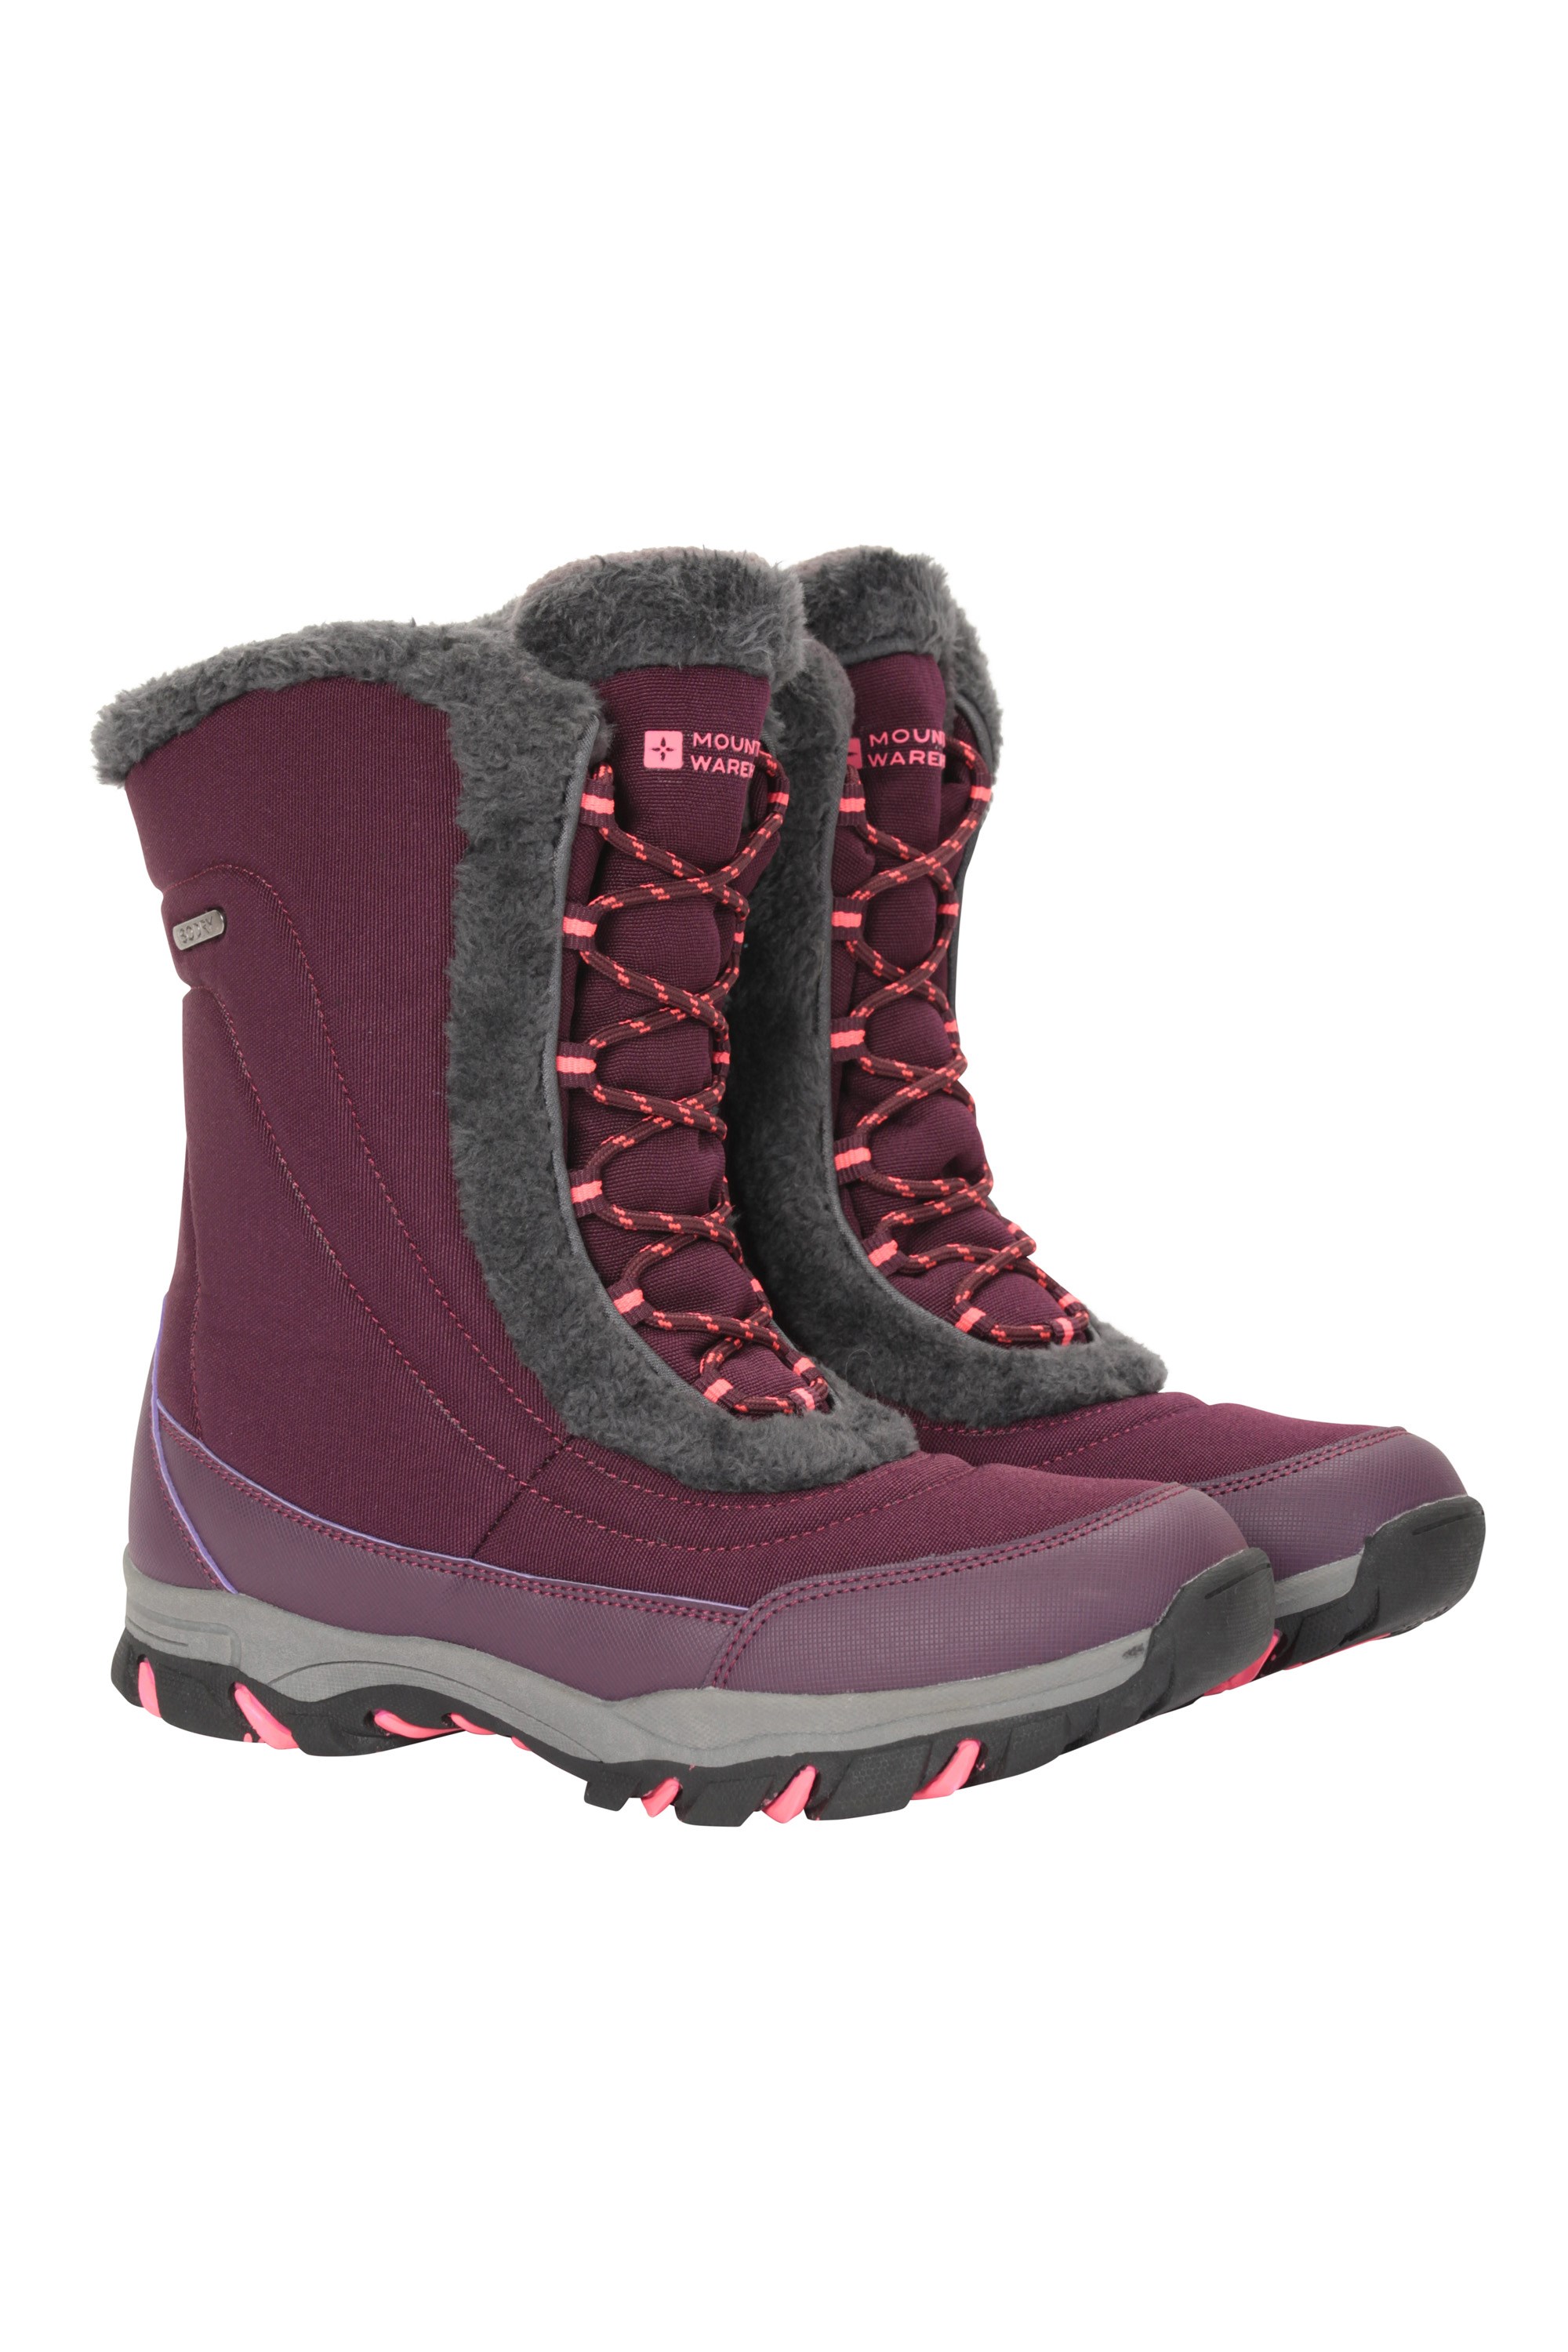 mountain warehouse ladies snow boots